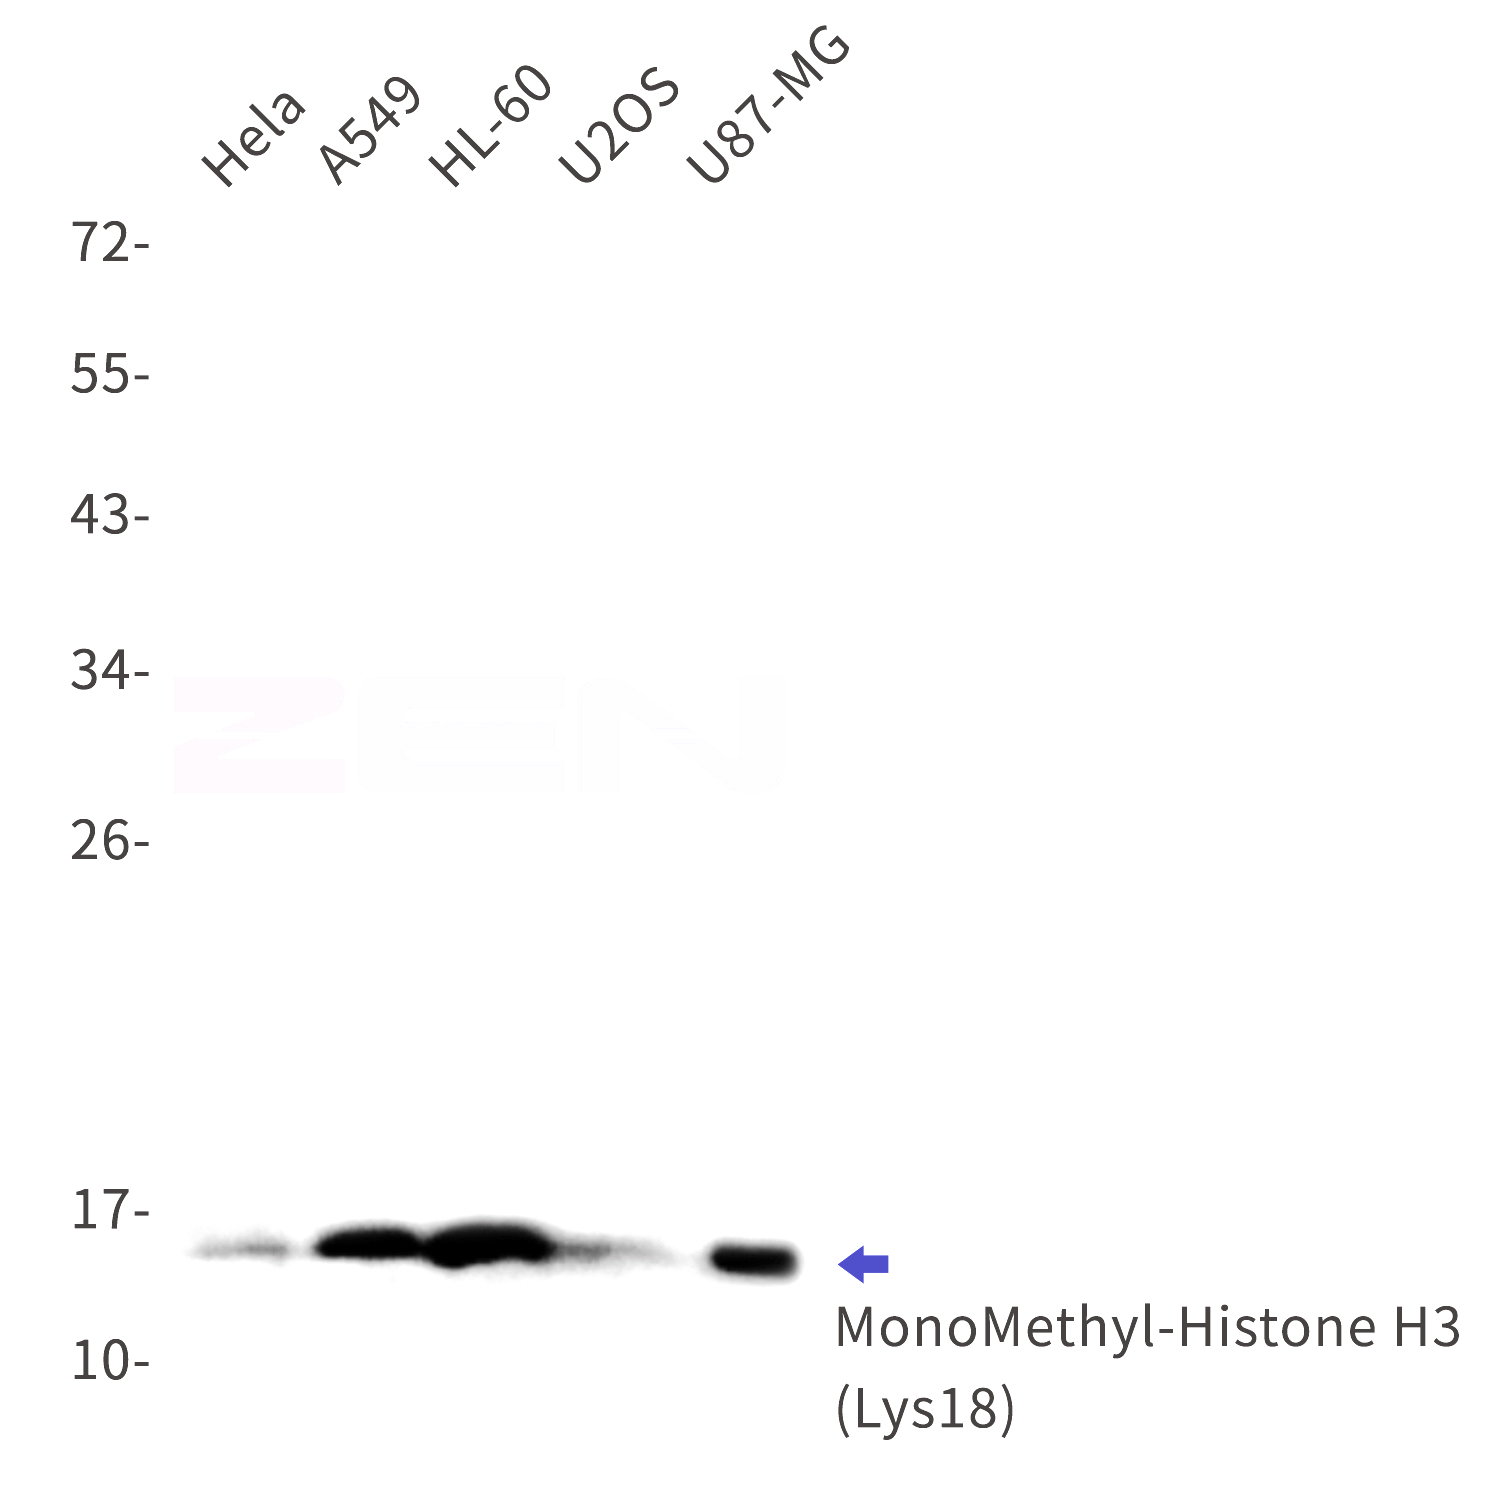 Western blot detection of MonoMethyl-Histone H3 (Lys18) in Hela,A549,HL-60,U2OS,U87-MG cell lysates using MonoMethyl-Histone H3 (Lys18) Rabbit mAb(1:1000 diluted).Observed band size:15kDa.